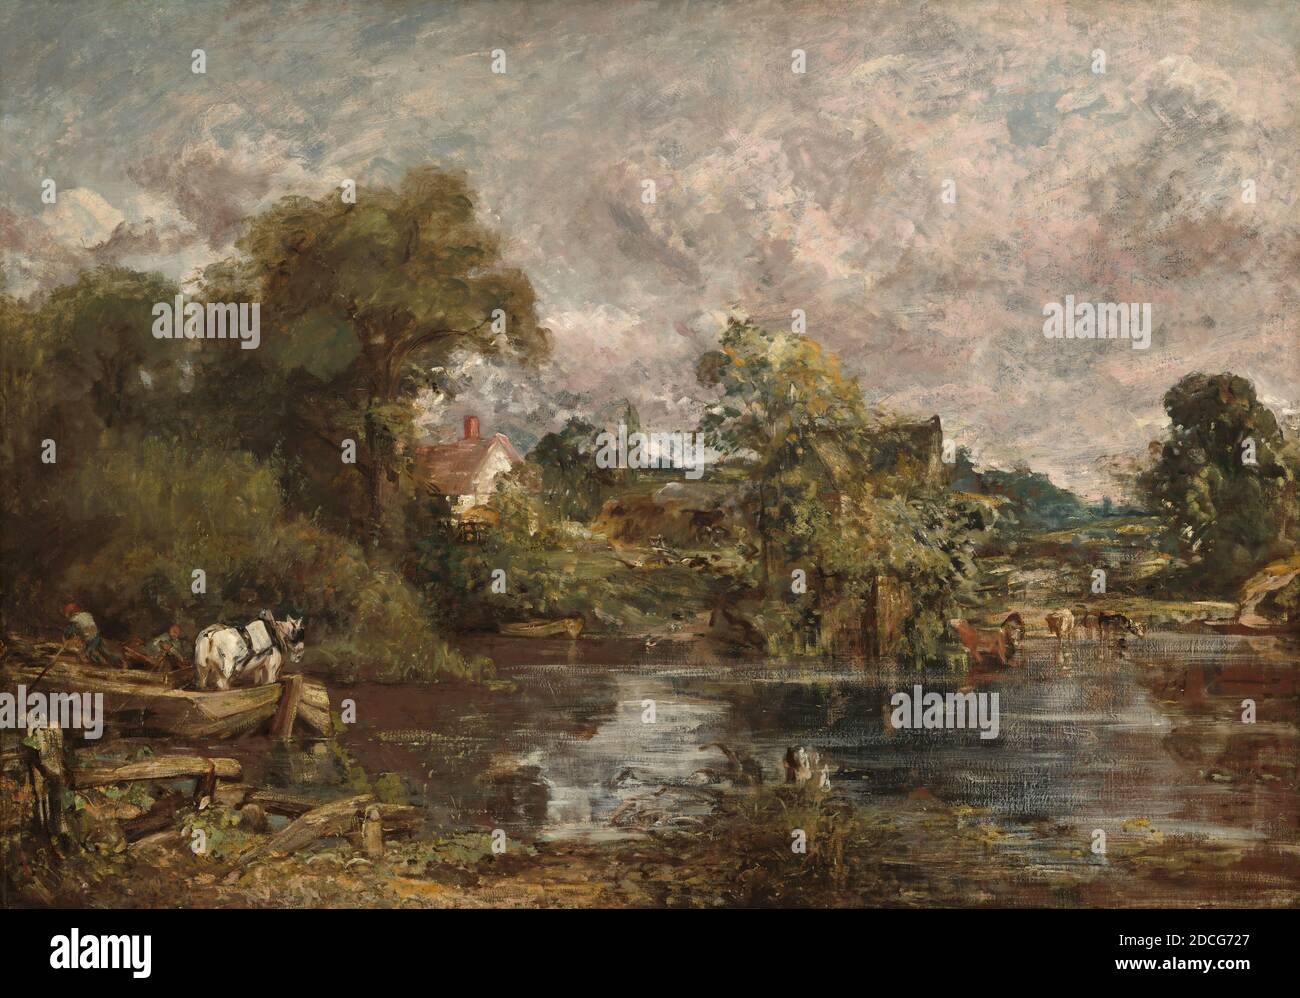 John Constable, (Künstler), Brite, 1776 - 1837, The White Horse, 1818-1819, Öl auf Leinwand, insgesamt: 127 x 183 cm (50 x 72 1/16 Zoll), gerahmt: 164.5 x 219.7 x 17.2 cm (64 3/4 x 86 1/2 x 6 3/4 Zoll Stockfoto